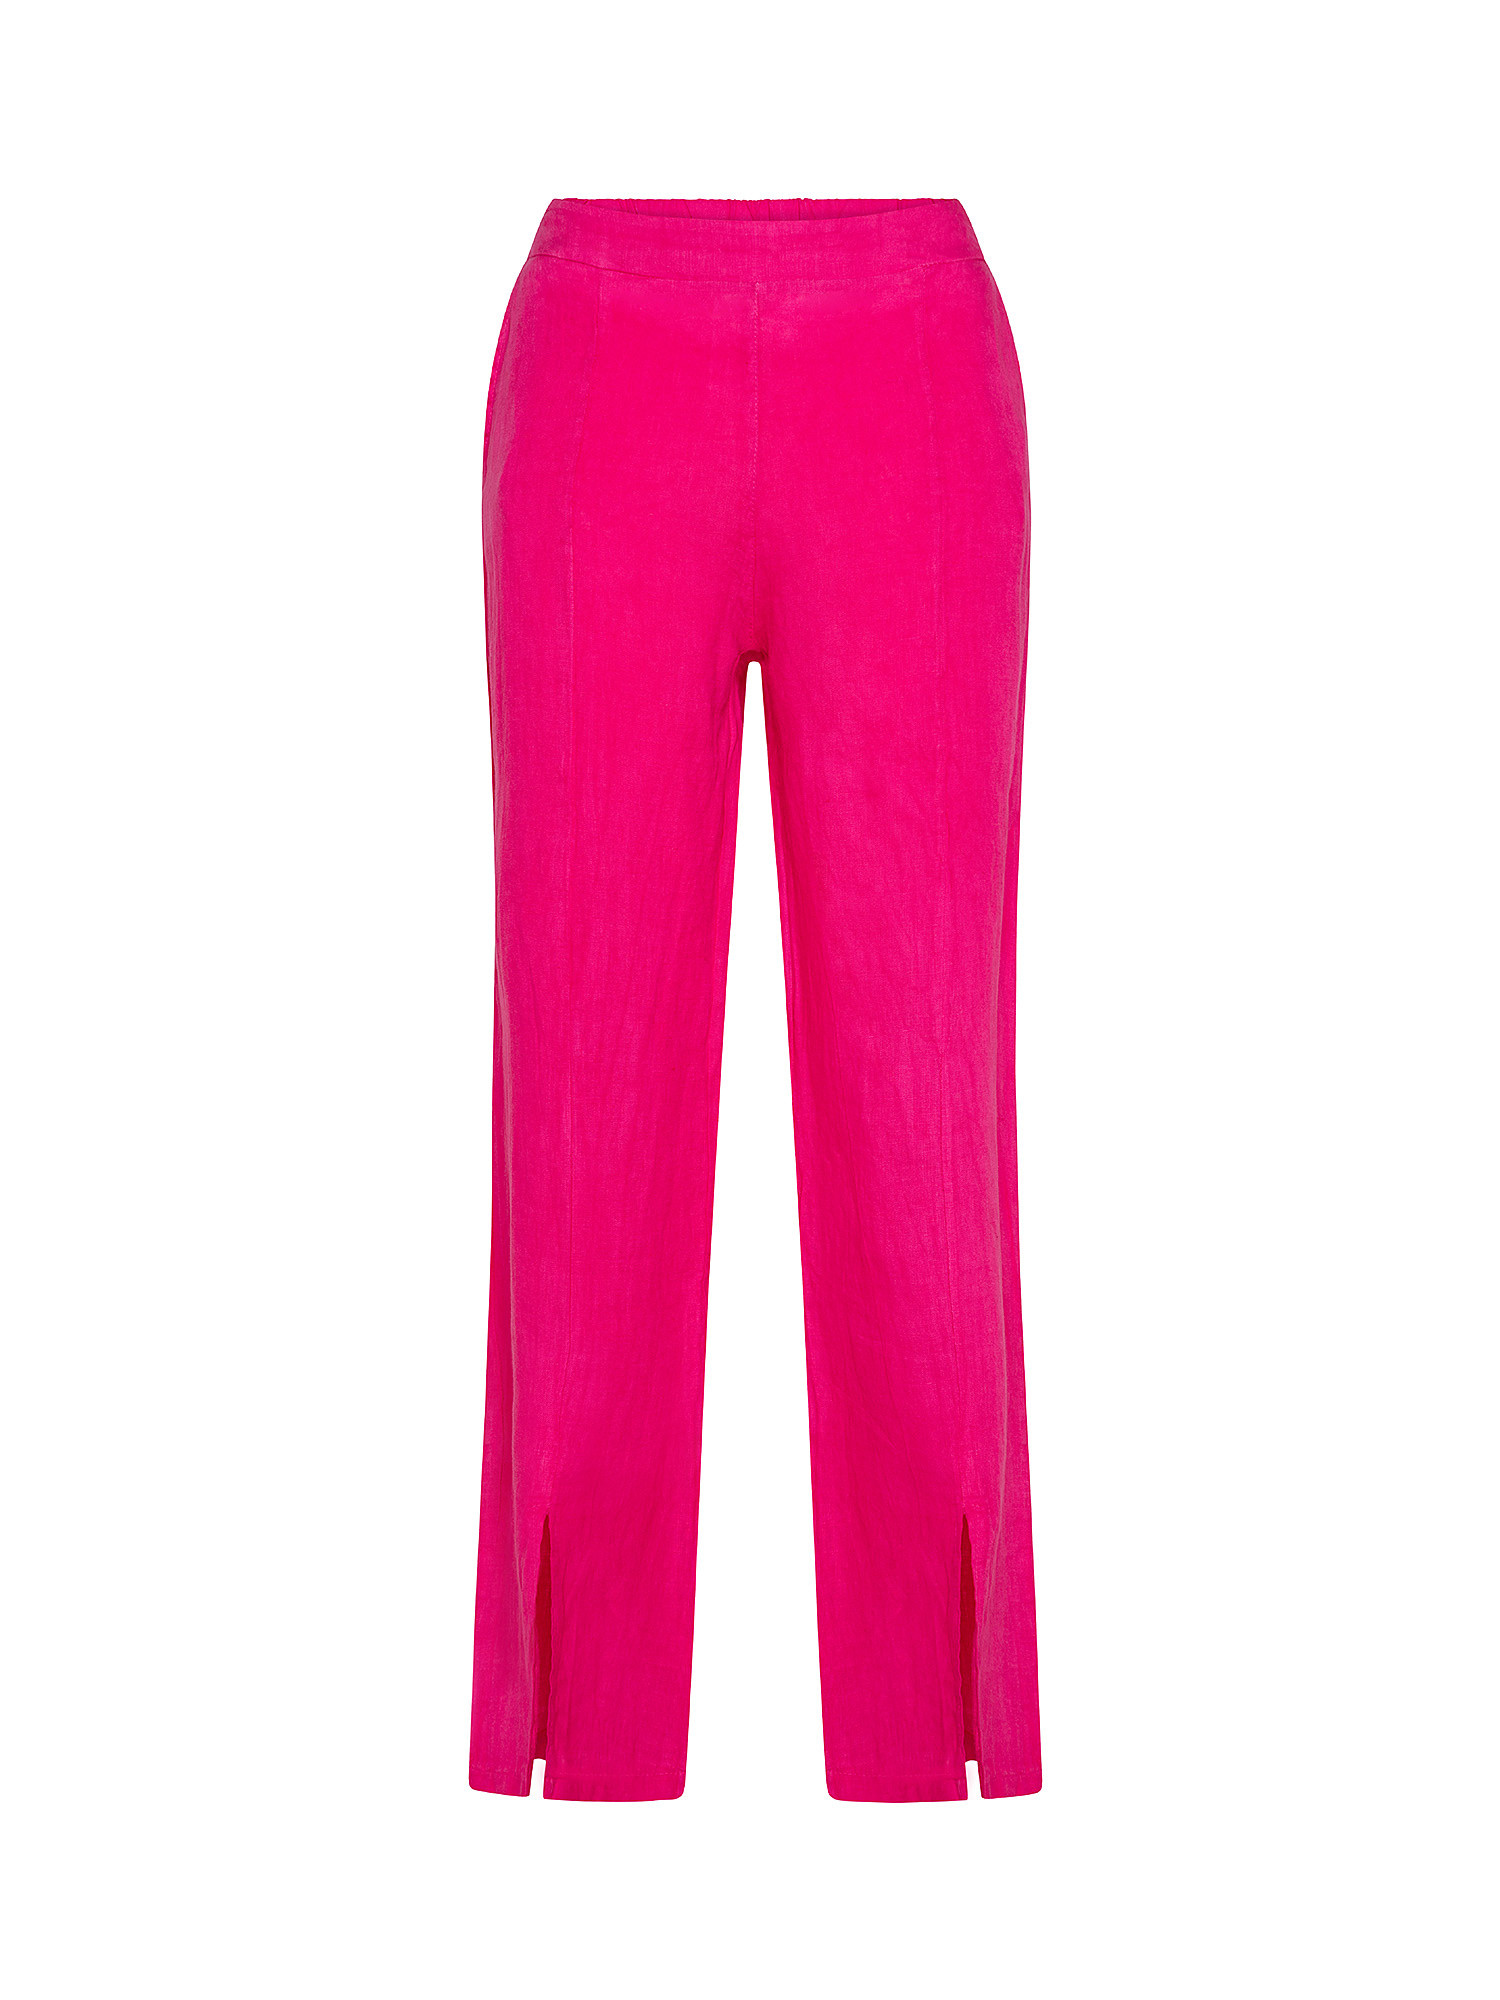 Pantalone puro lino con spacco, Rosa fuxia, large image number 0